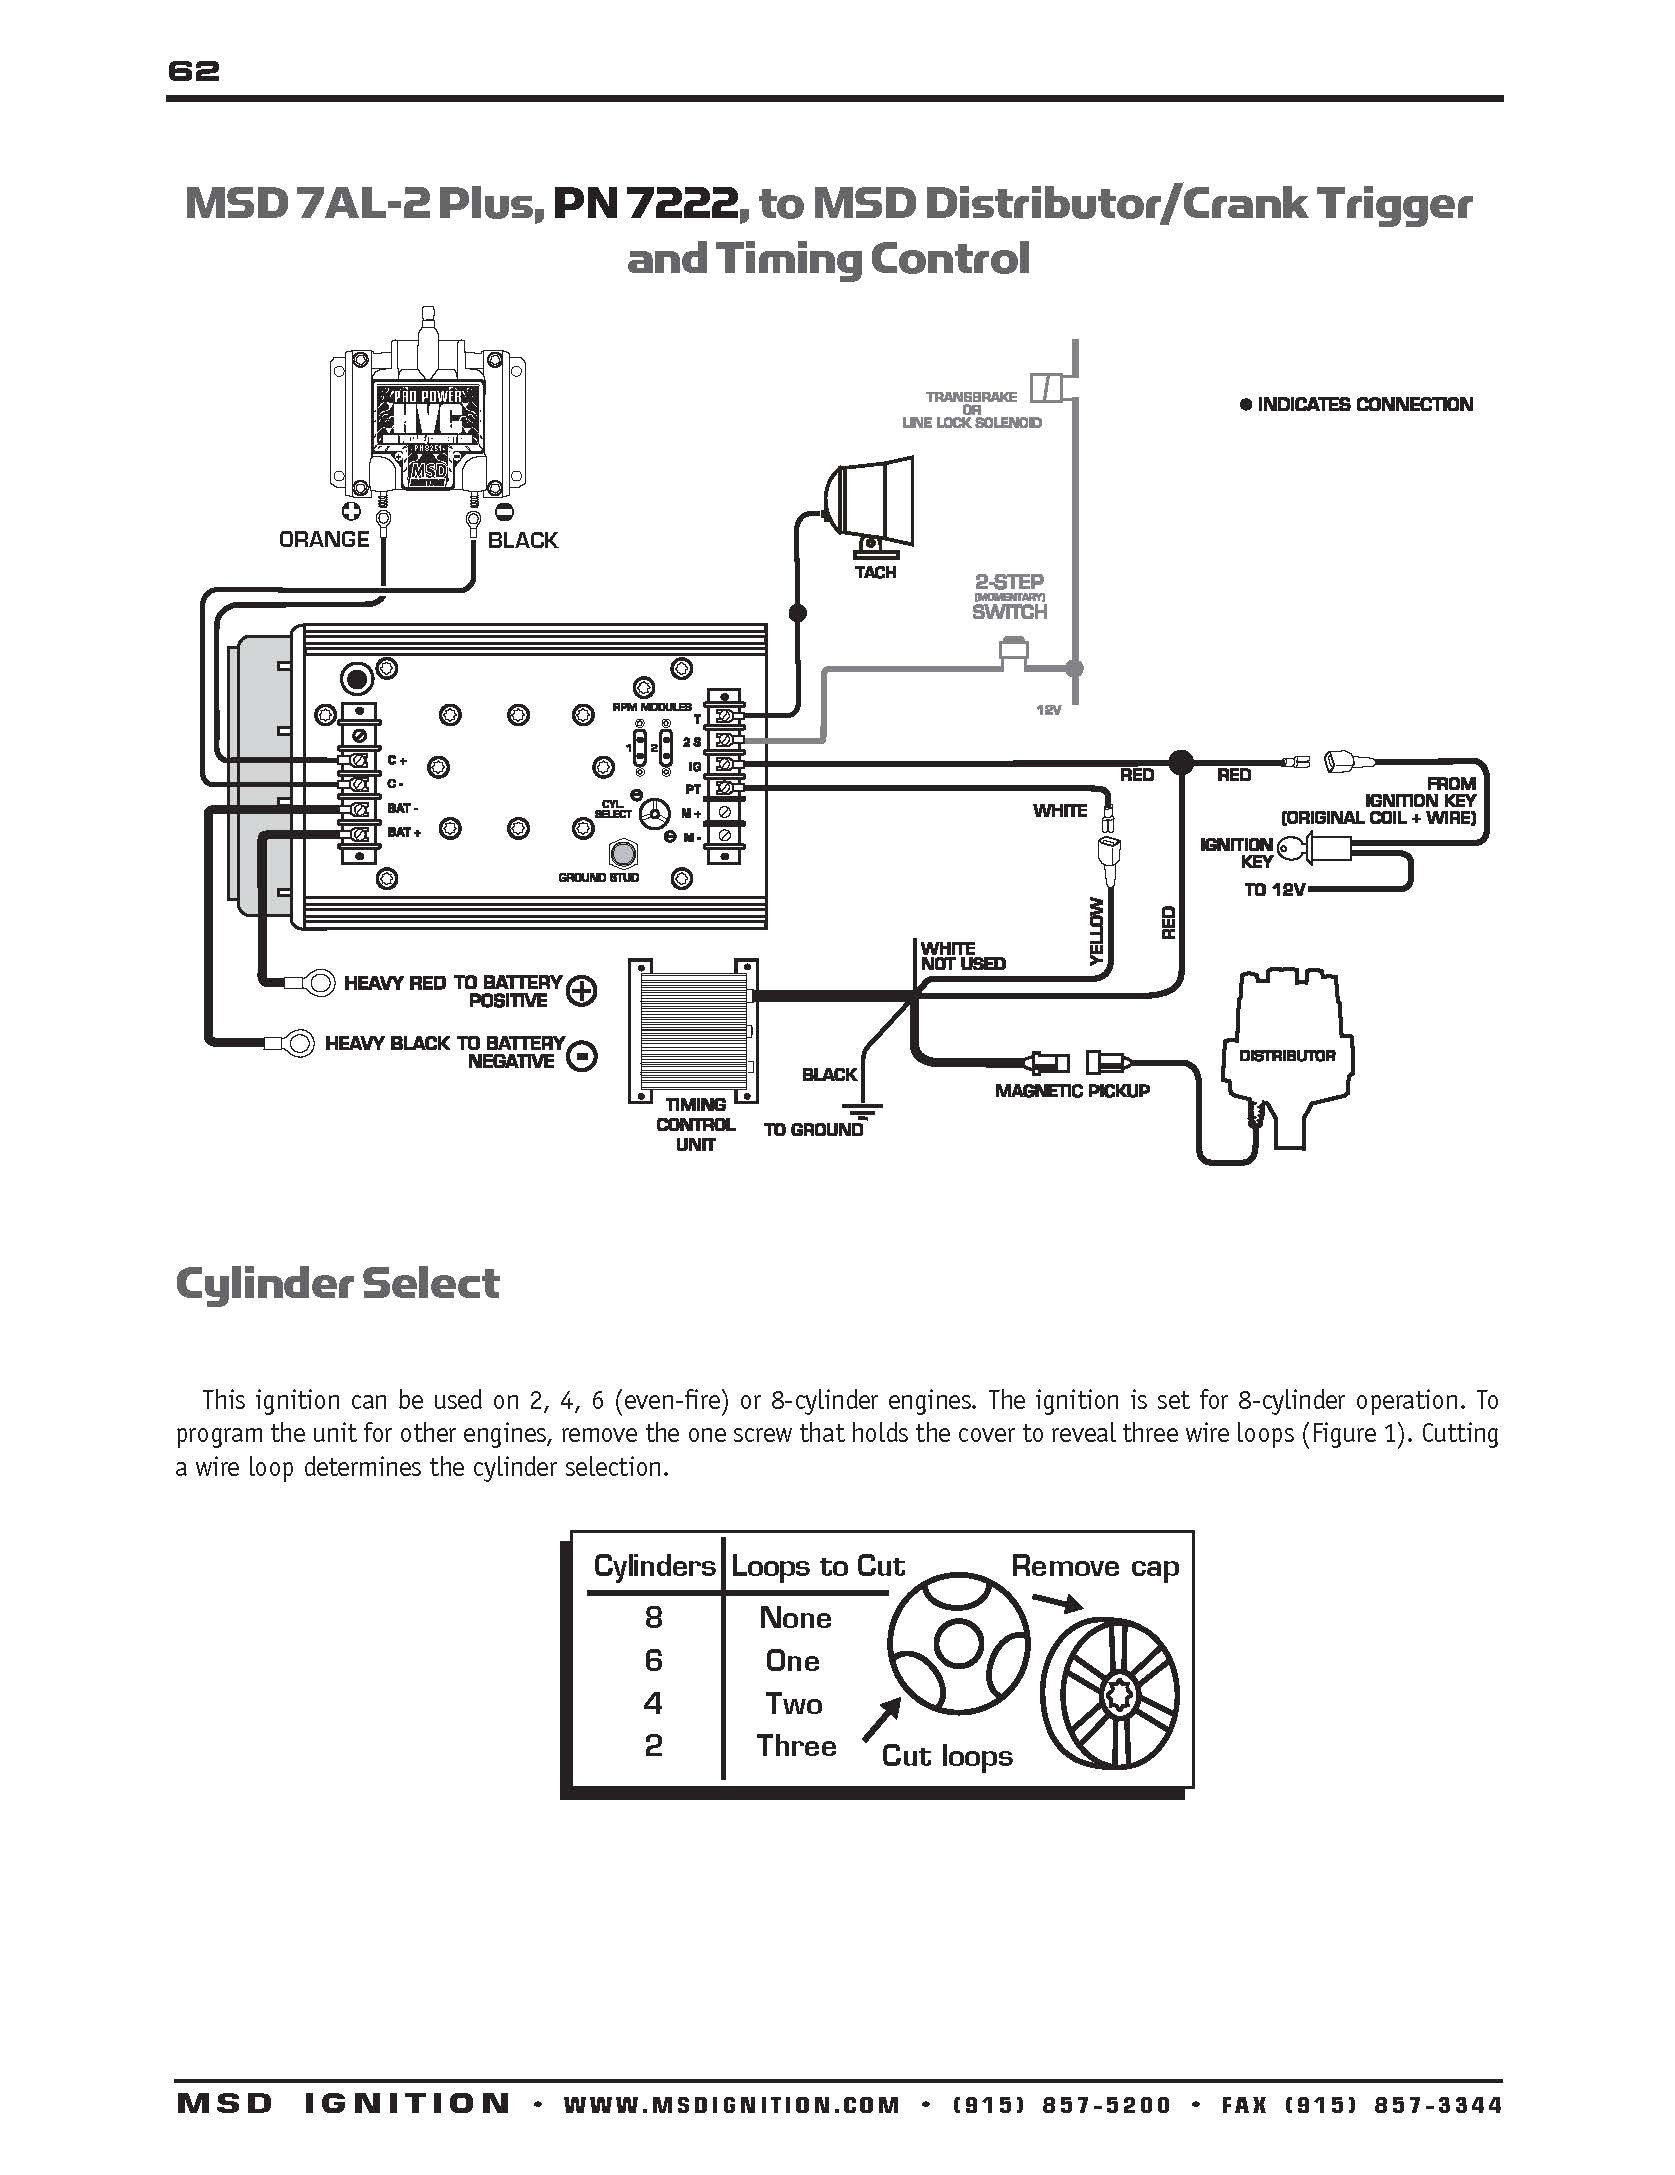 msd distributor wiring diagram awesome great wiring diagrammsd distributor wiring diagram inspirational msd 8360 wiring diagram